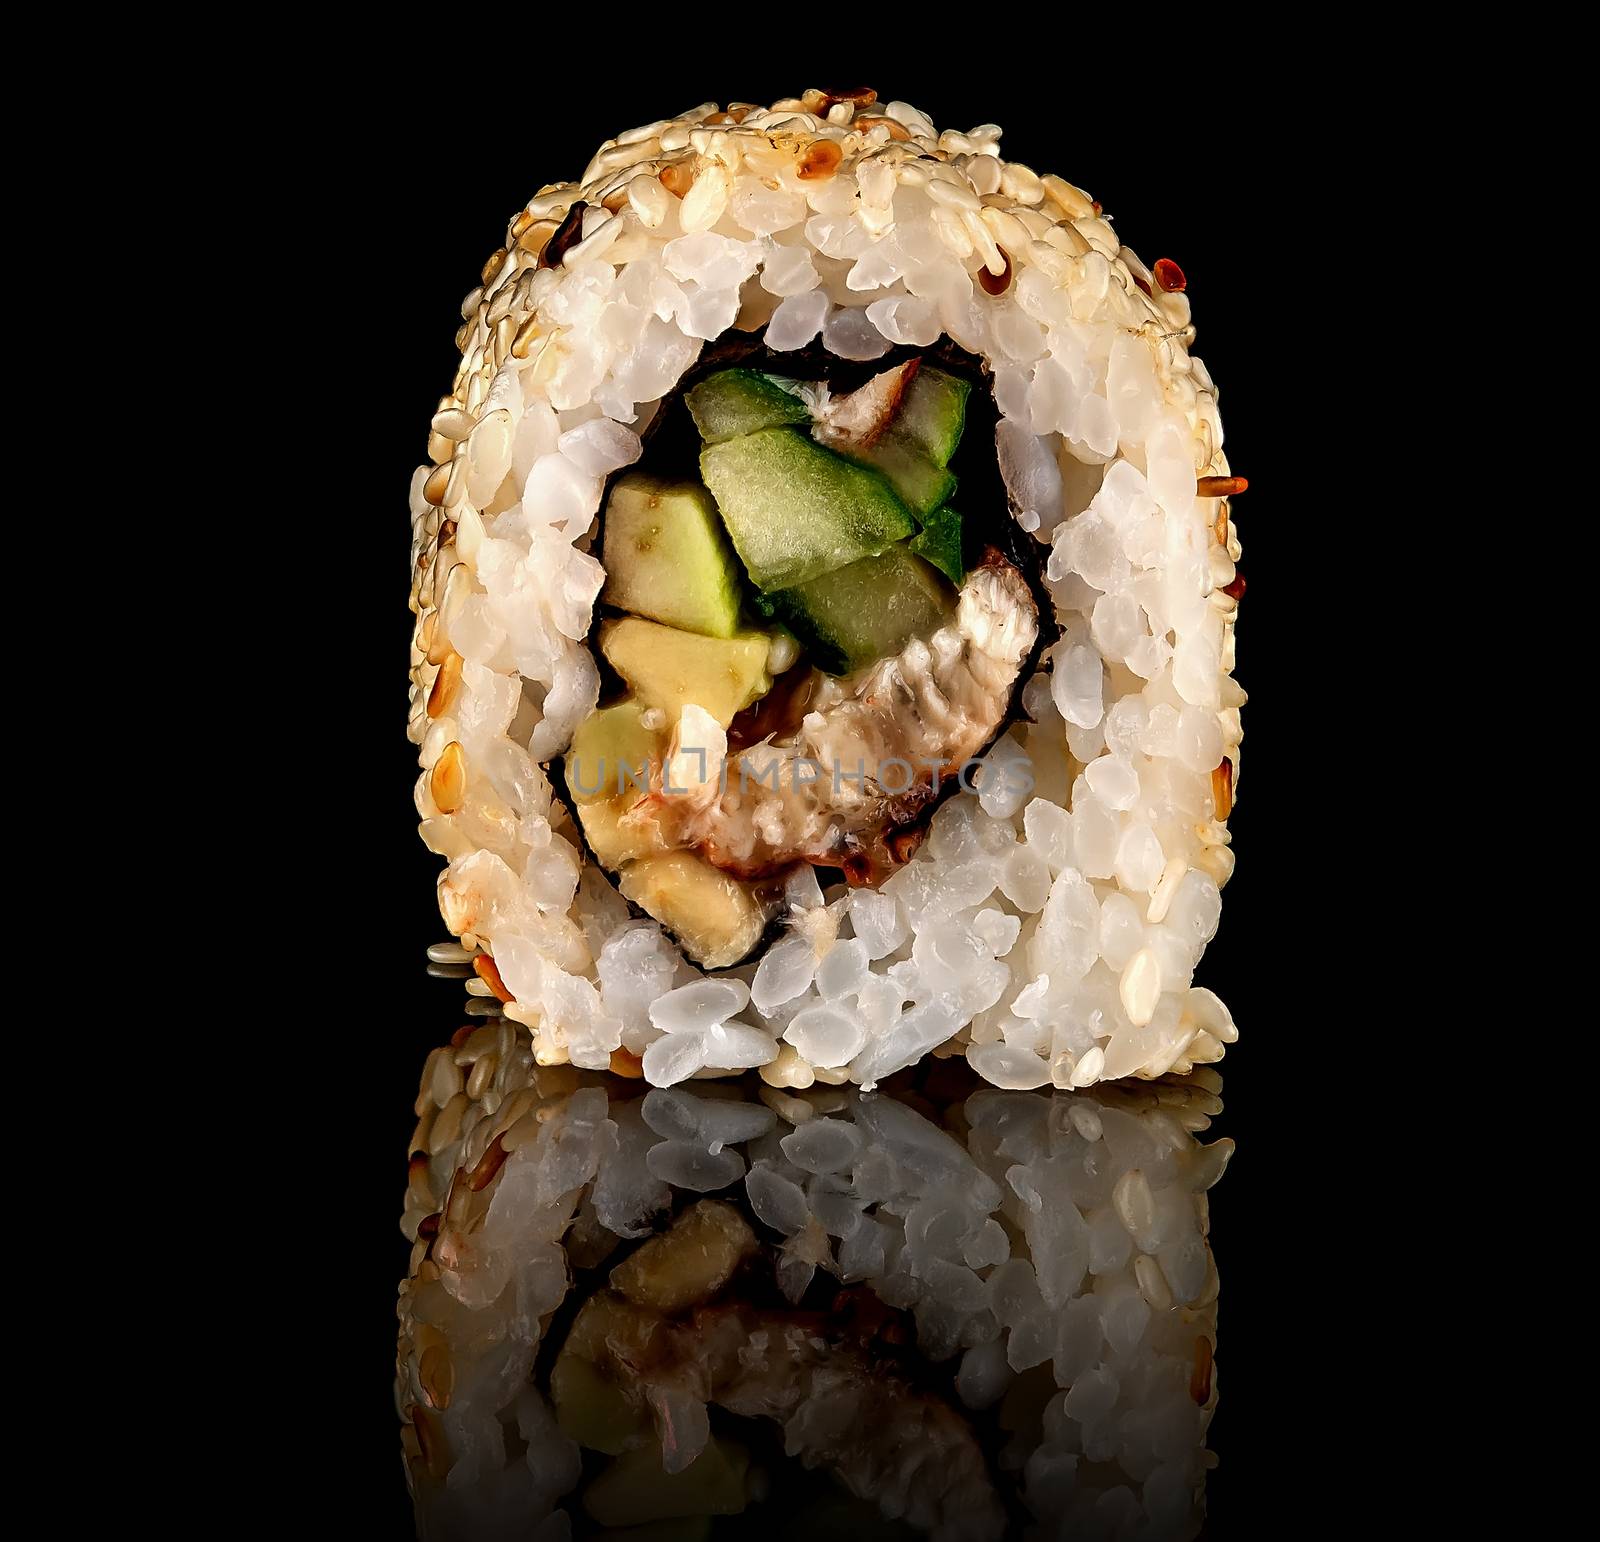 Single sushi roll california rotated. Black background. Reflection